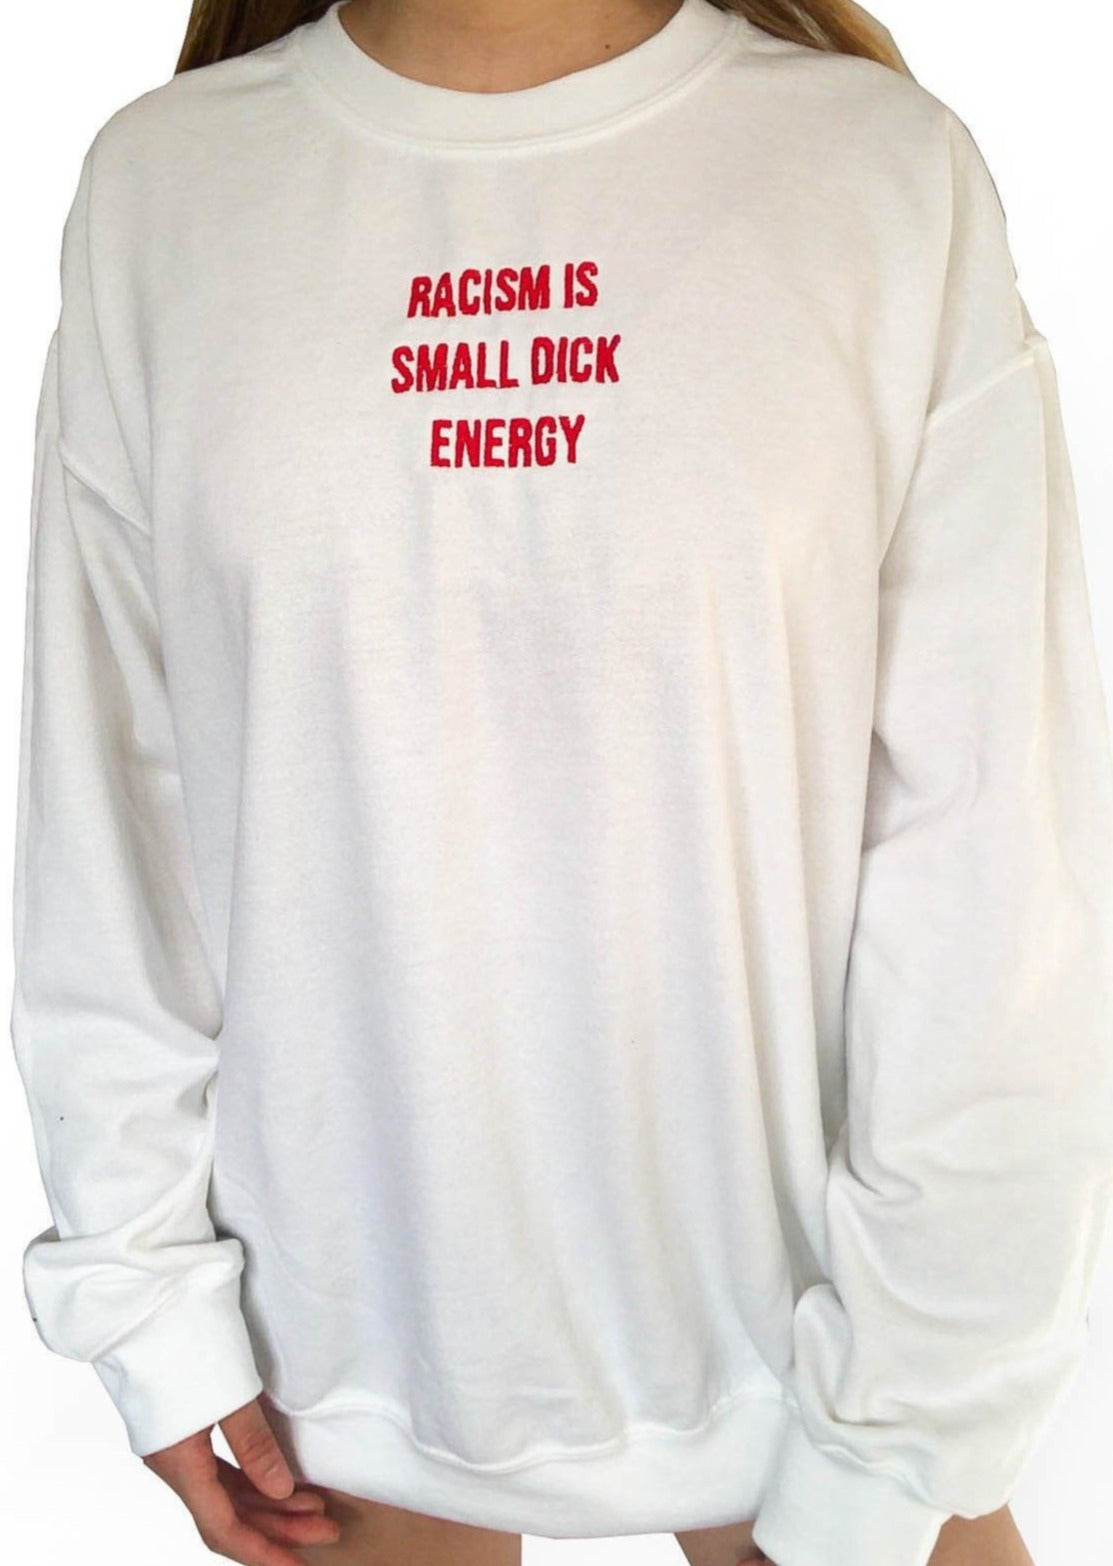 "RACISM IS SMALL DICK ENERGY" Embroidered Sweatshirt